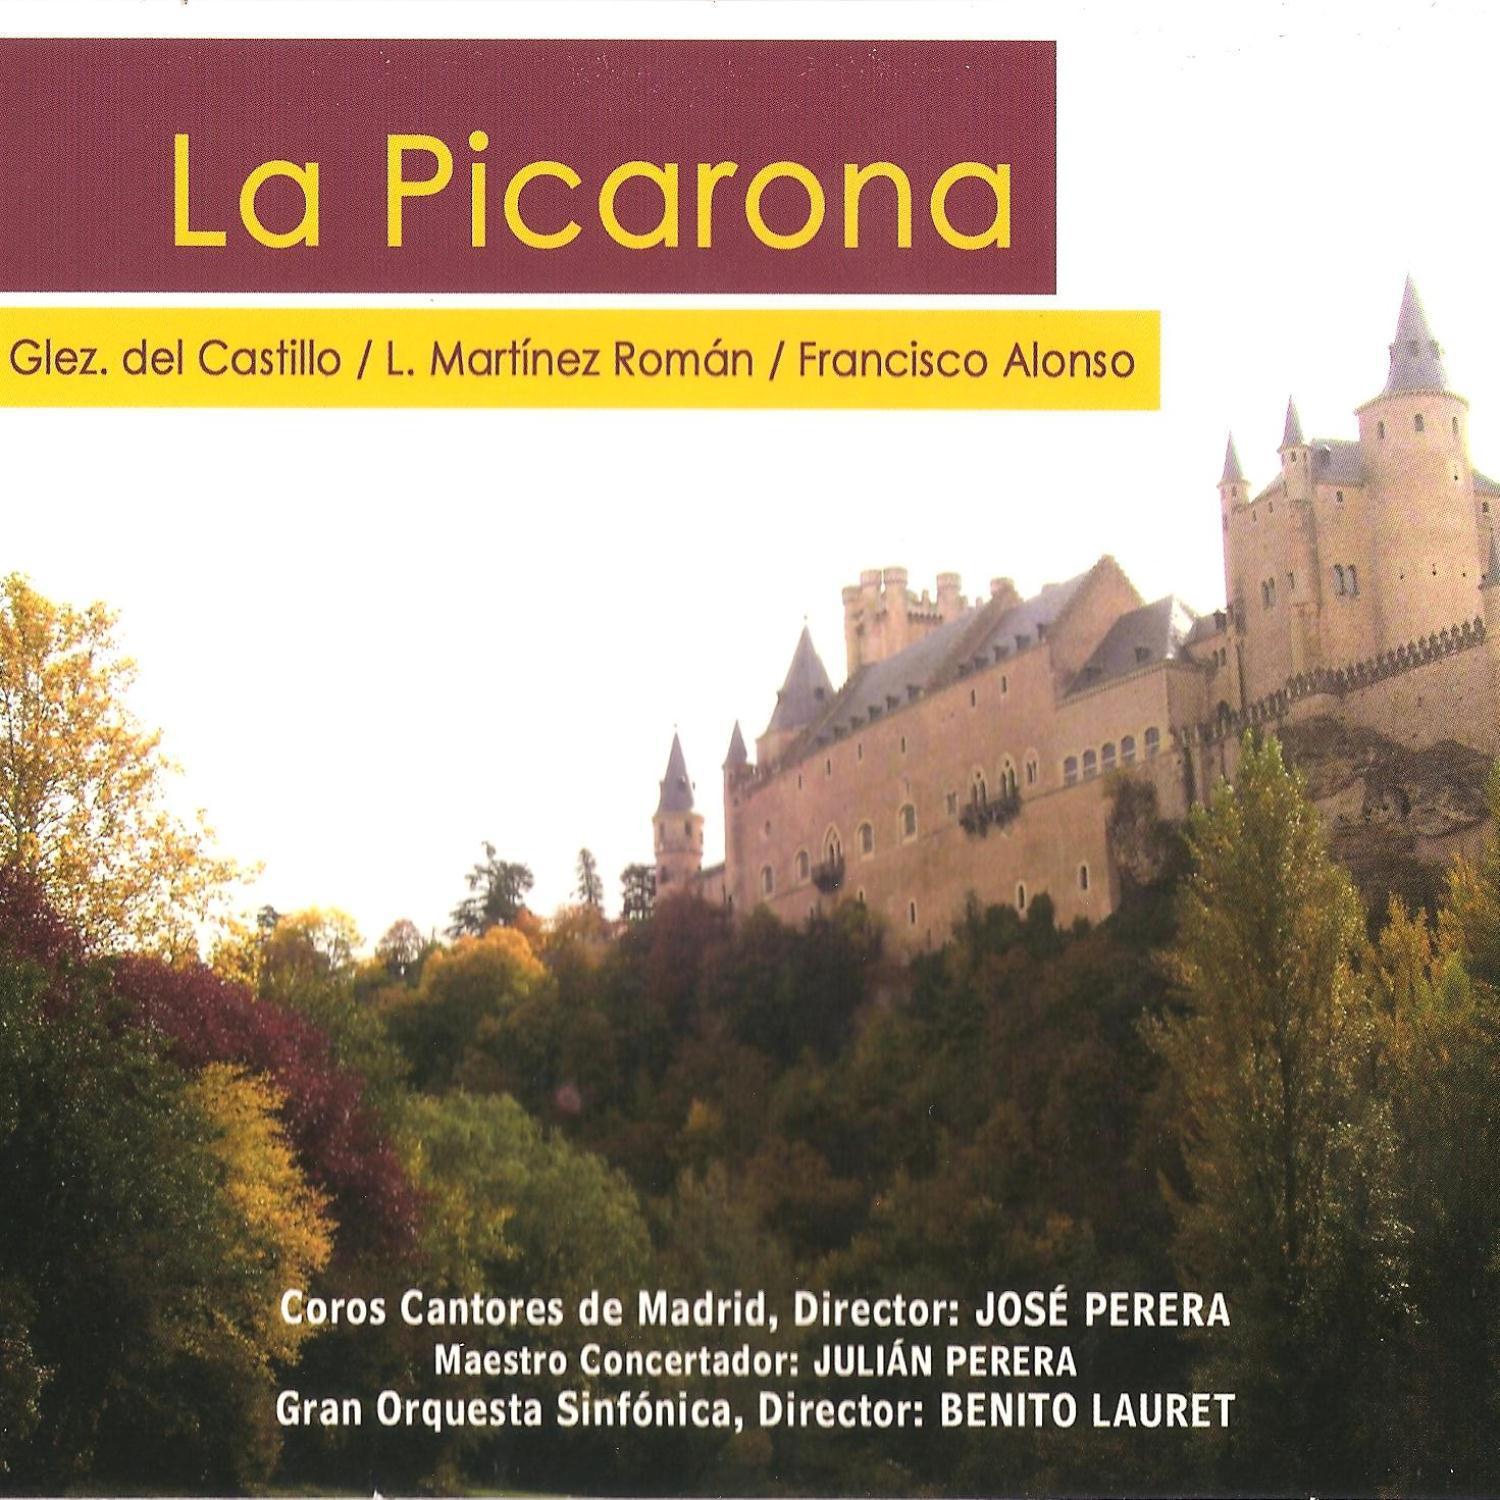 Gran Orquesta Sinfónica - La Picarona: 